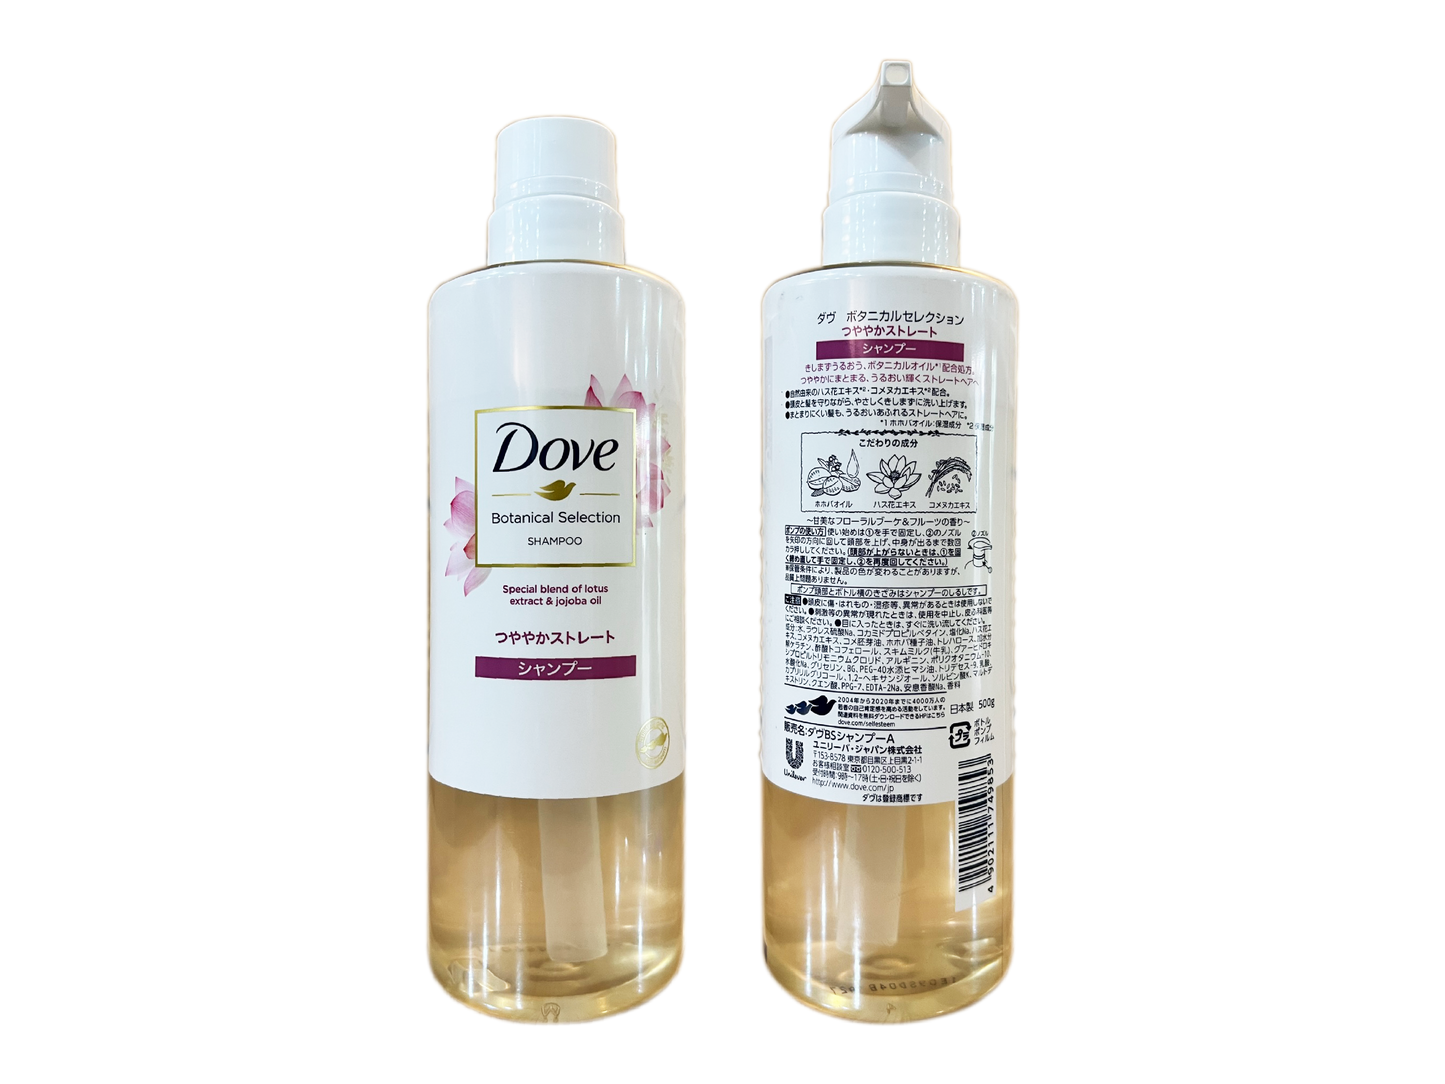 Dove, Lotus Extract & Jojoba Oil, Shampoo (500 g)